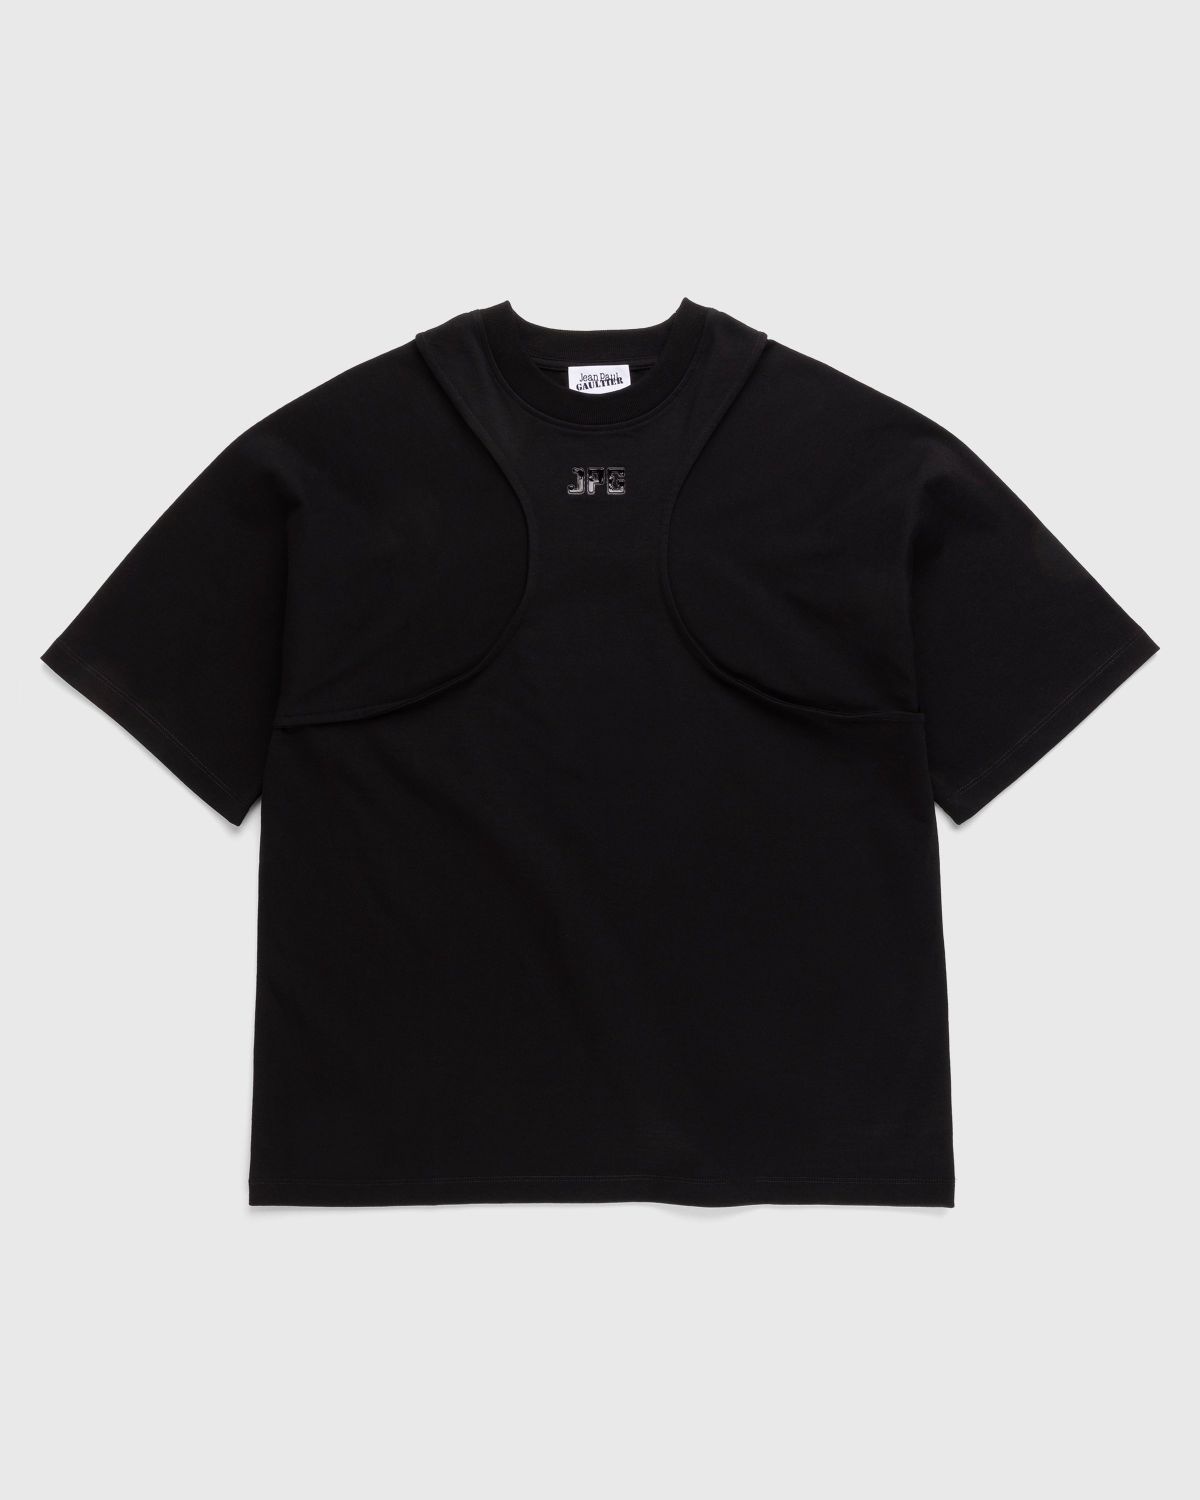 Jean Paul Gaultier – JPG T-Shirt Black - 1